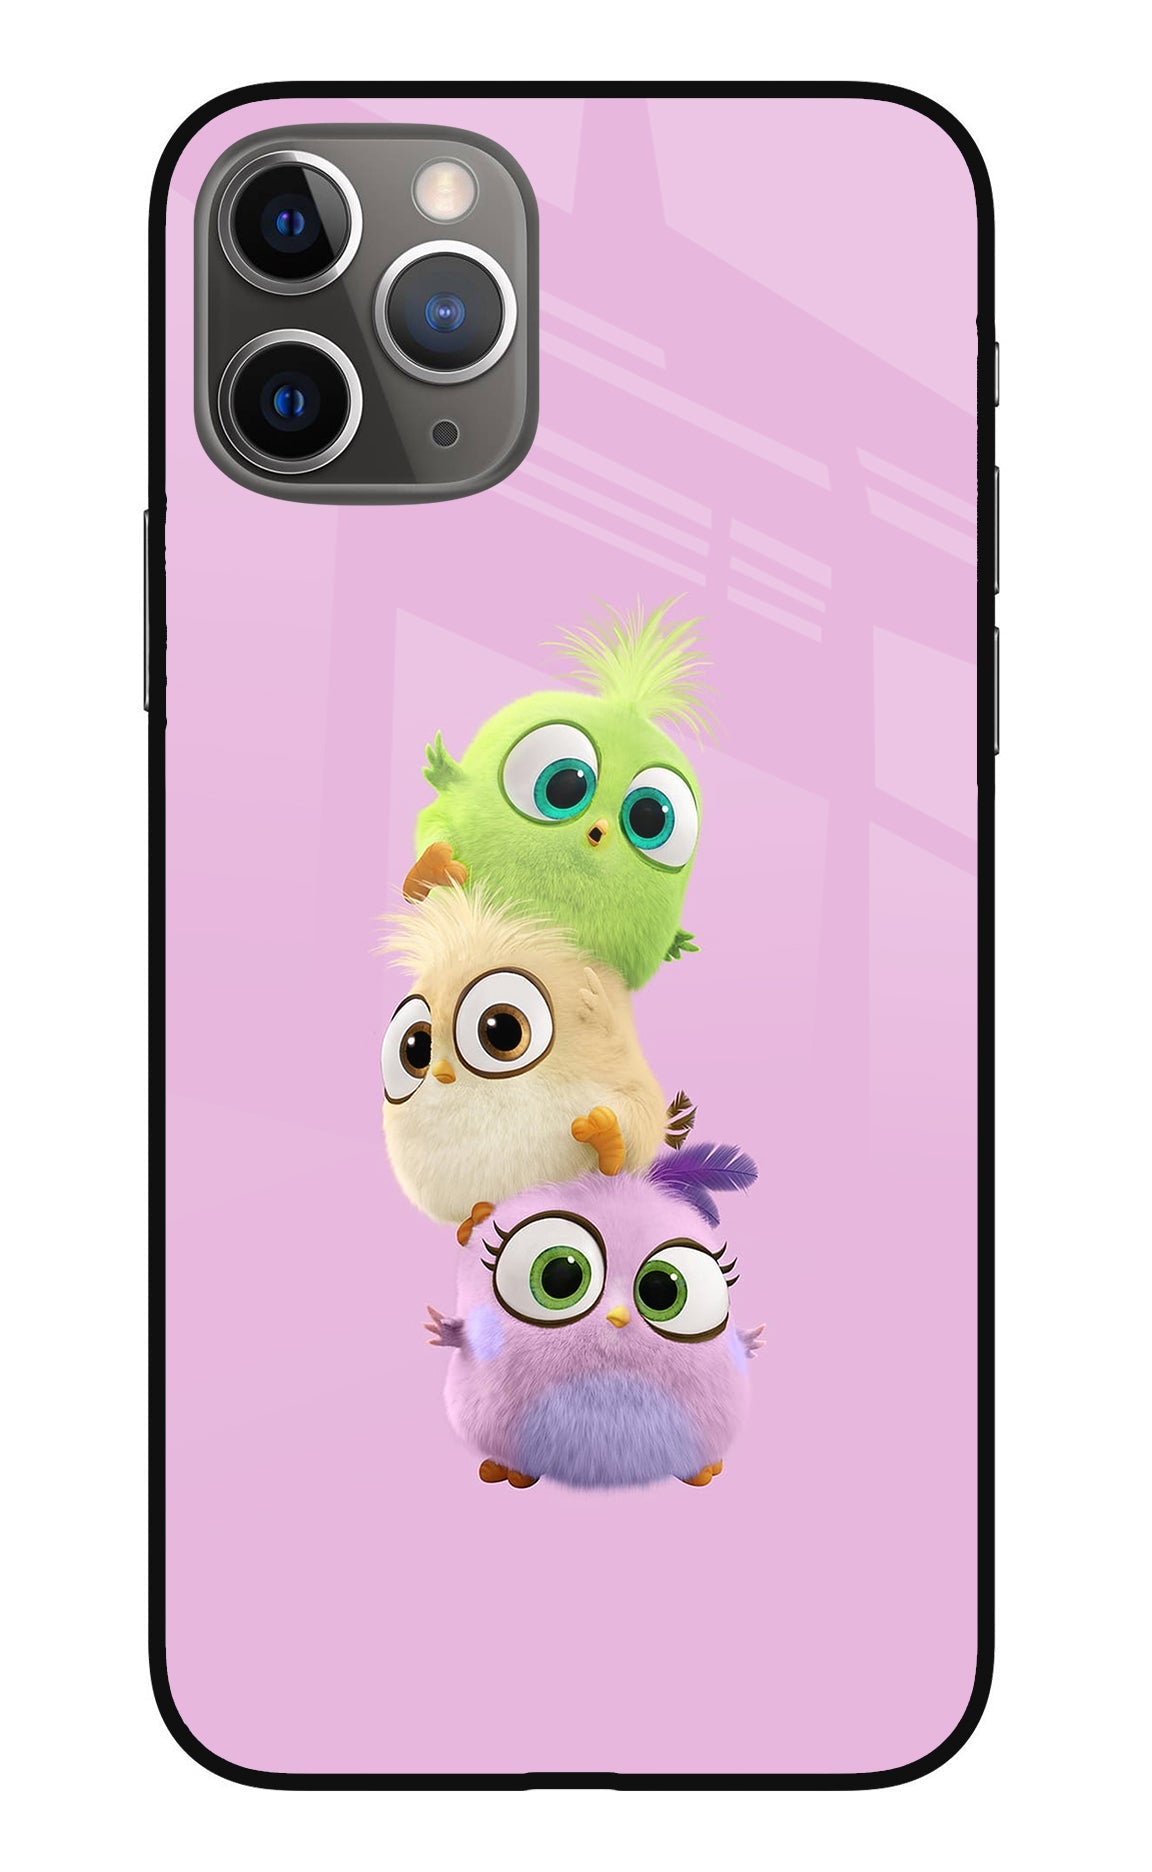 Cute Little Birds iPhone 11 Pro Max Glass Case